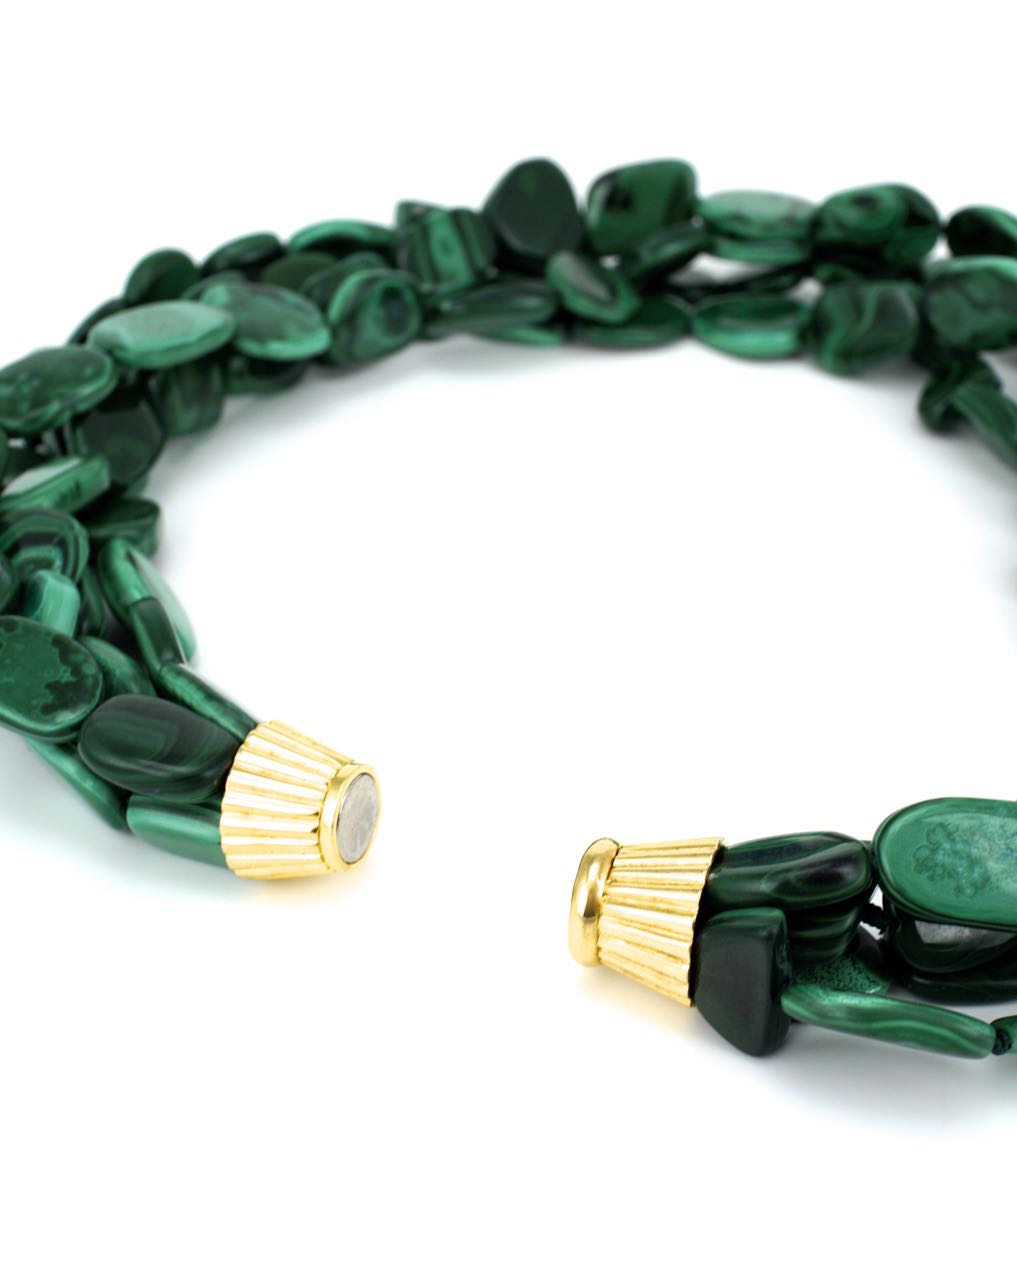 Malachite 4 strand bead necklace